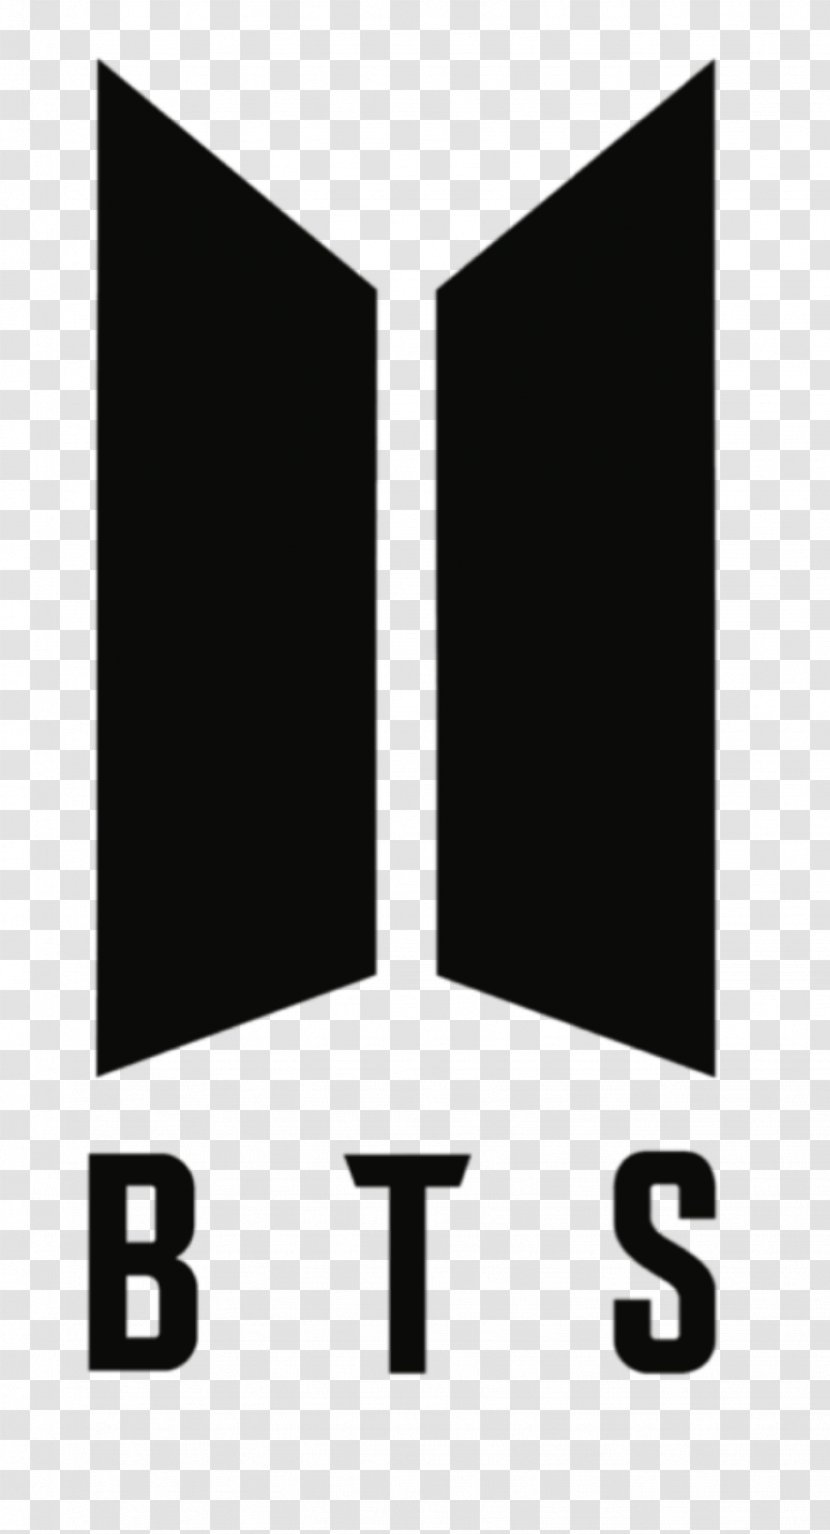 BTS Letter Logo Design on BLACK Background. BTS Creative Initials Letter  Logo Concept. BTS Letter Design.BTS Letter Logo Design on Stock Vector -  Illustration of btsshield, btscircle: 245342755